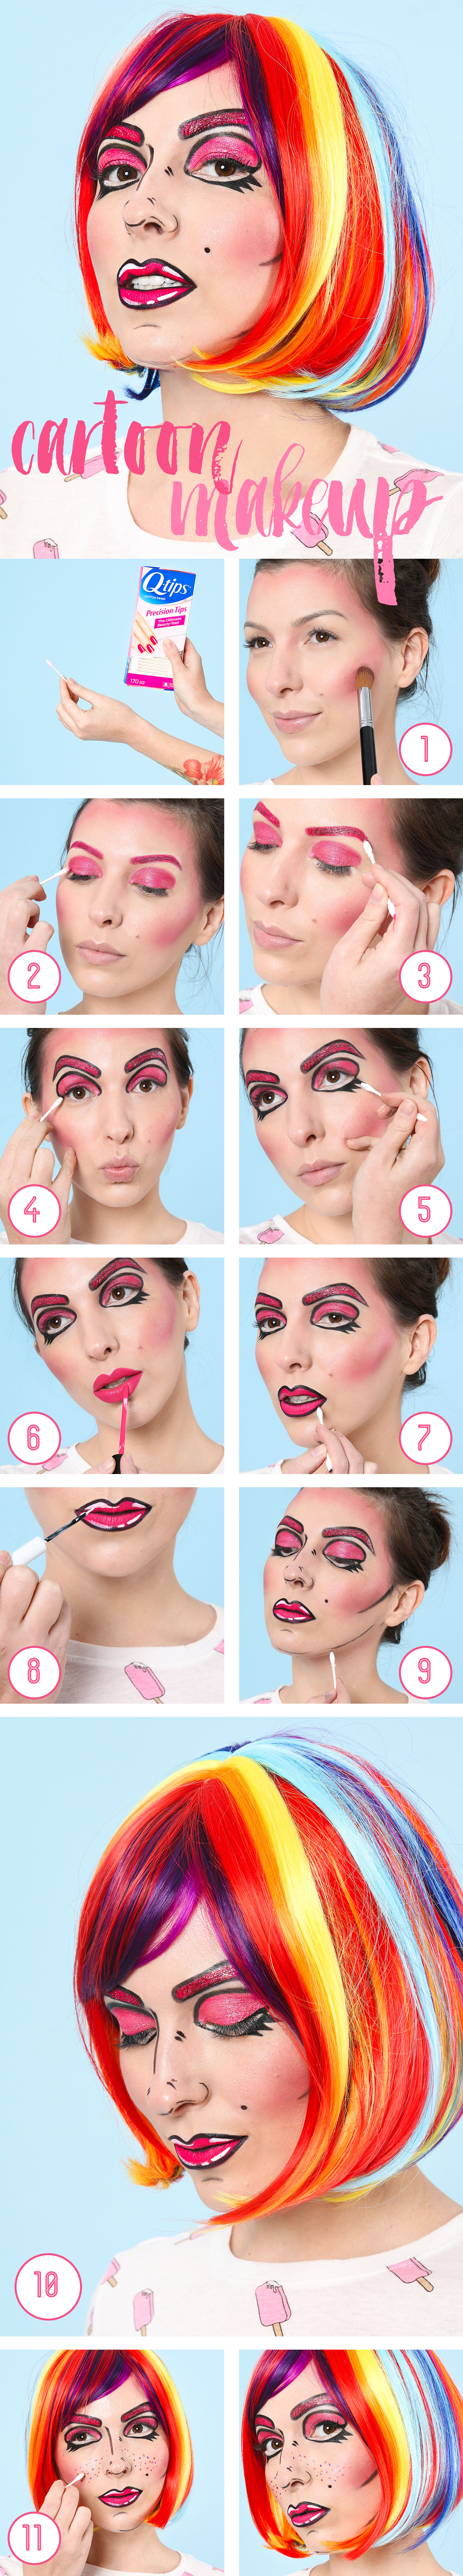 cartoon makeup tutorial for halloween